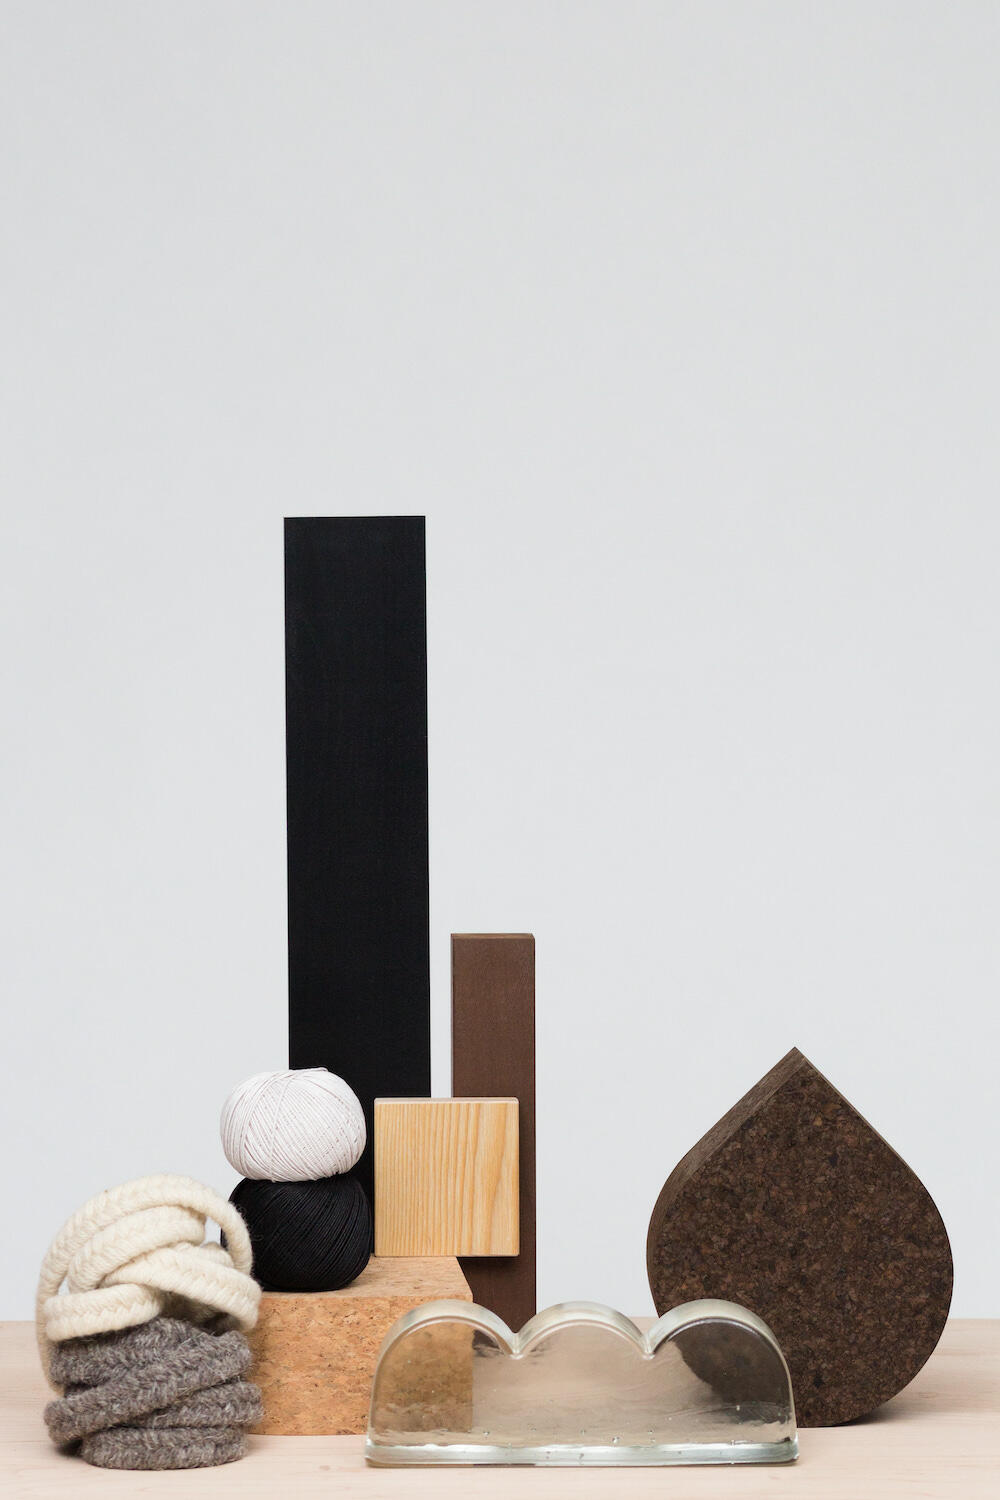 This Washington designer crafts sculptural furniture out of cork